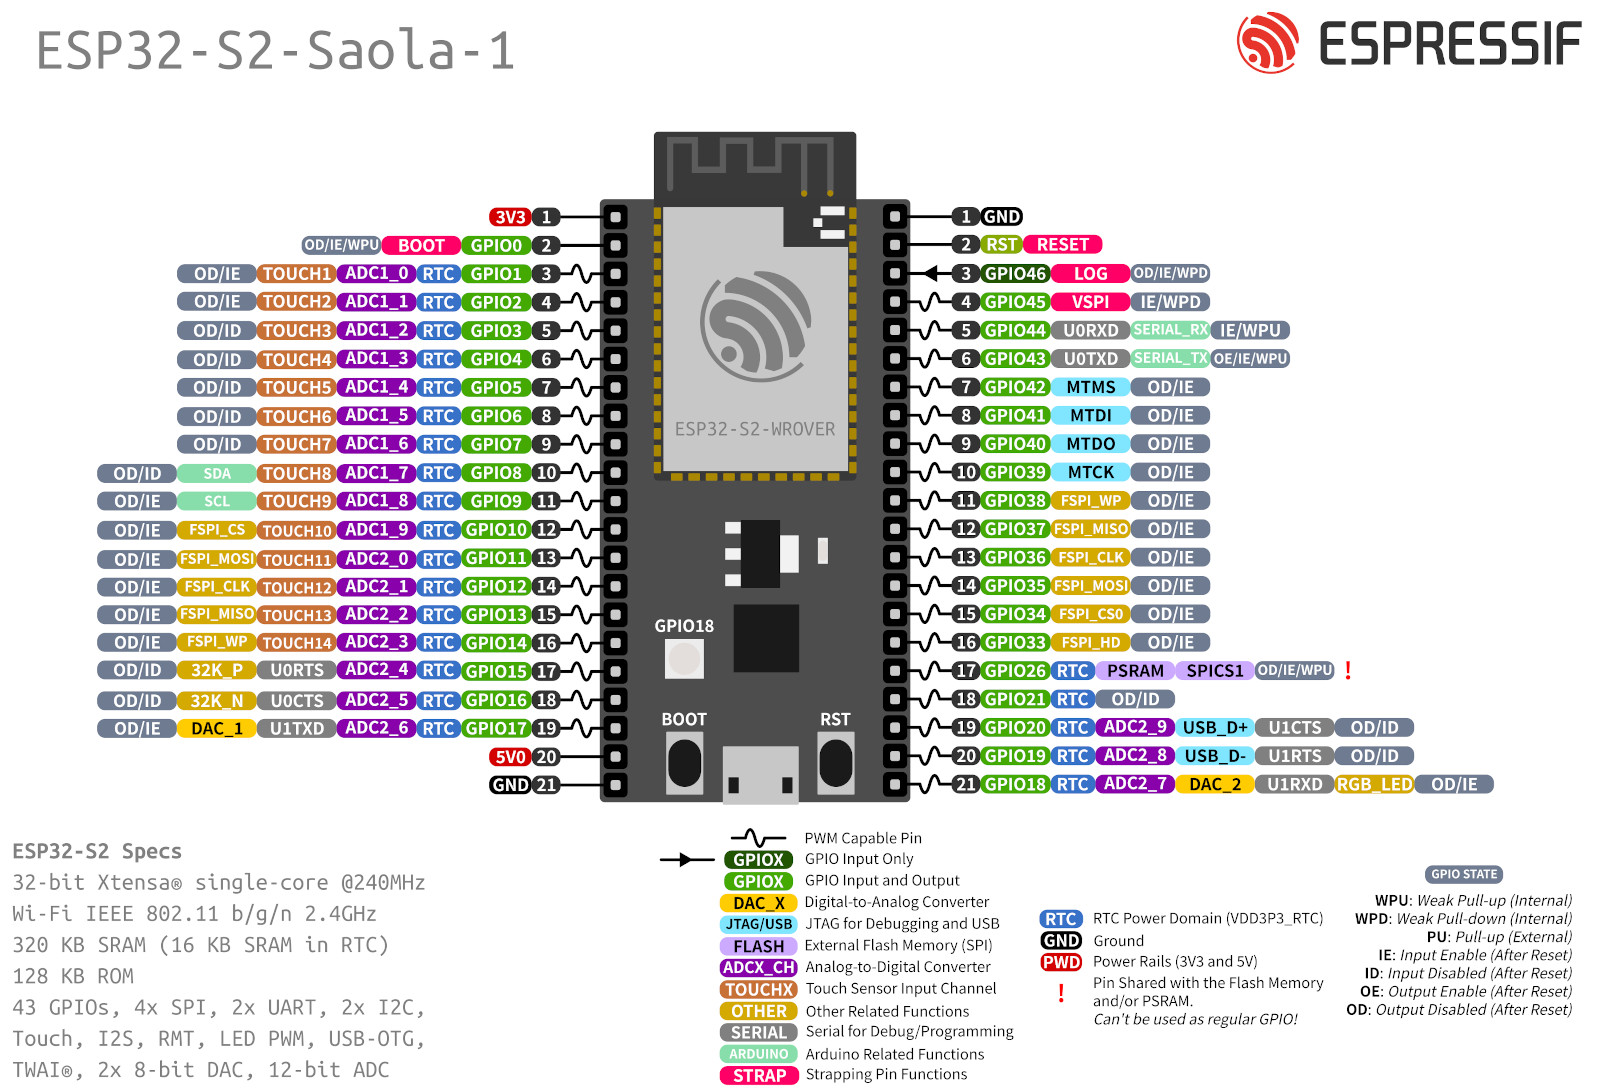 ESP32-S2-Saola-1 (click to enlarge)